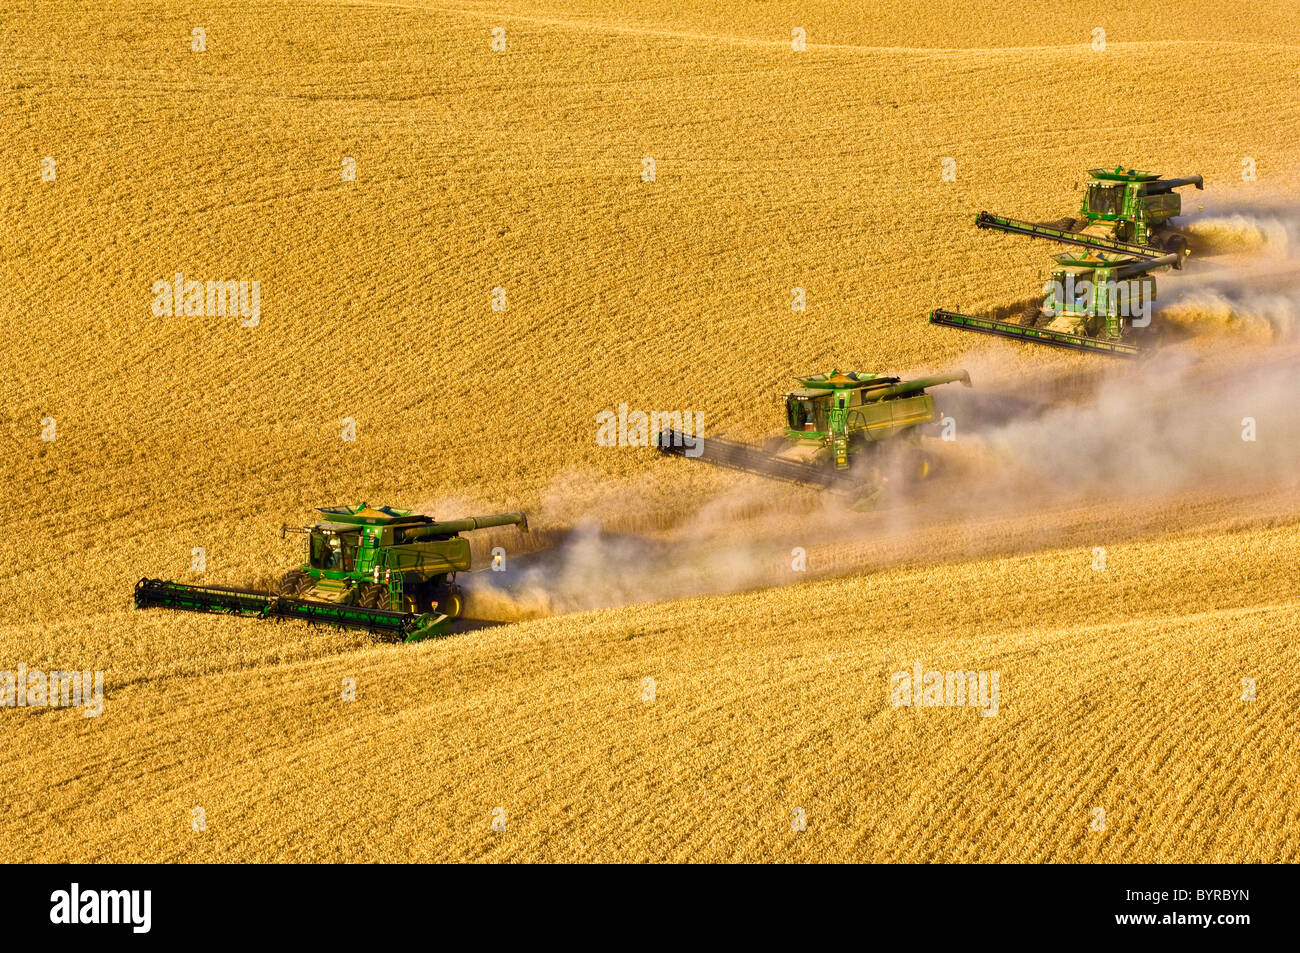 Four John Deere combines in tandem harvest wheat in a draw between hills / near Pullman, Palouse Region, Washington, USA. Stock Photo